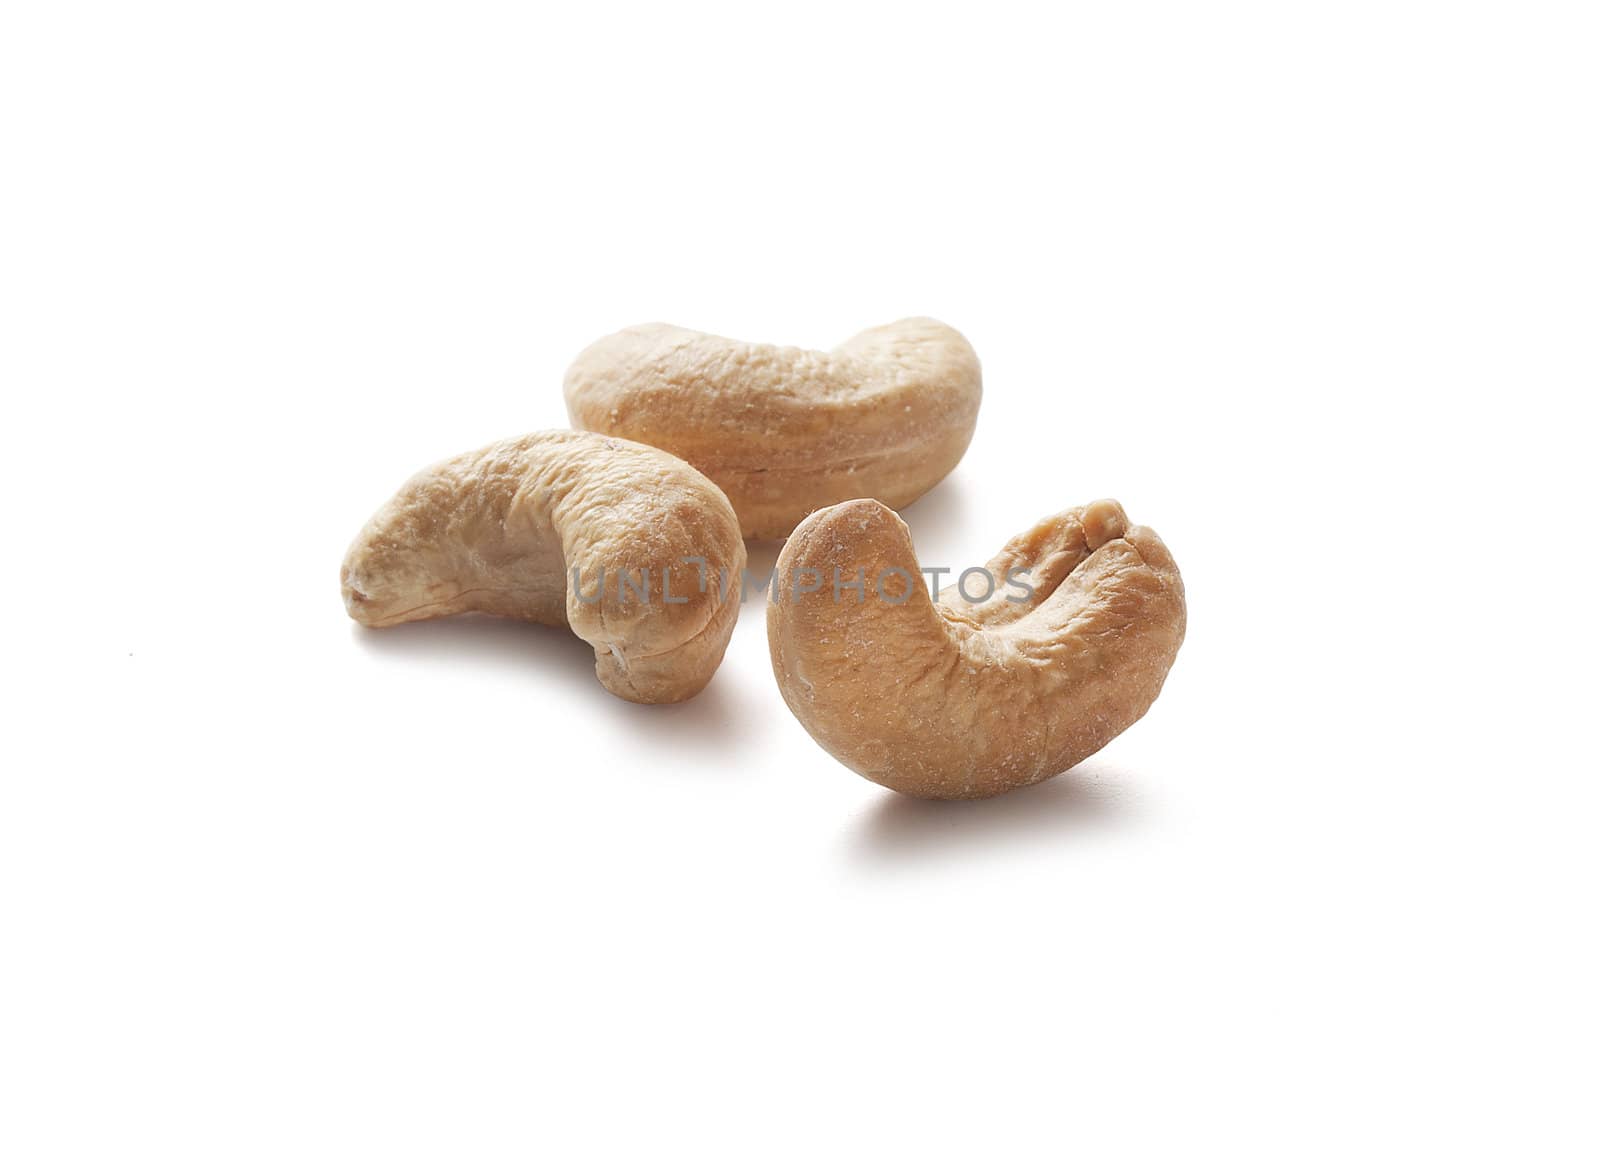 Cashew nut by Angorius